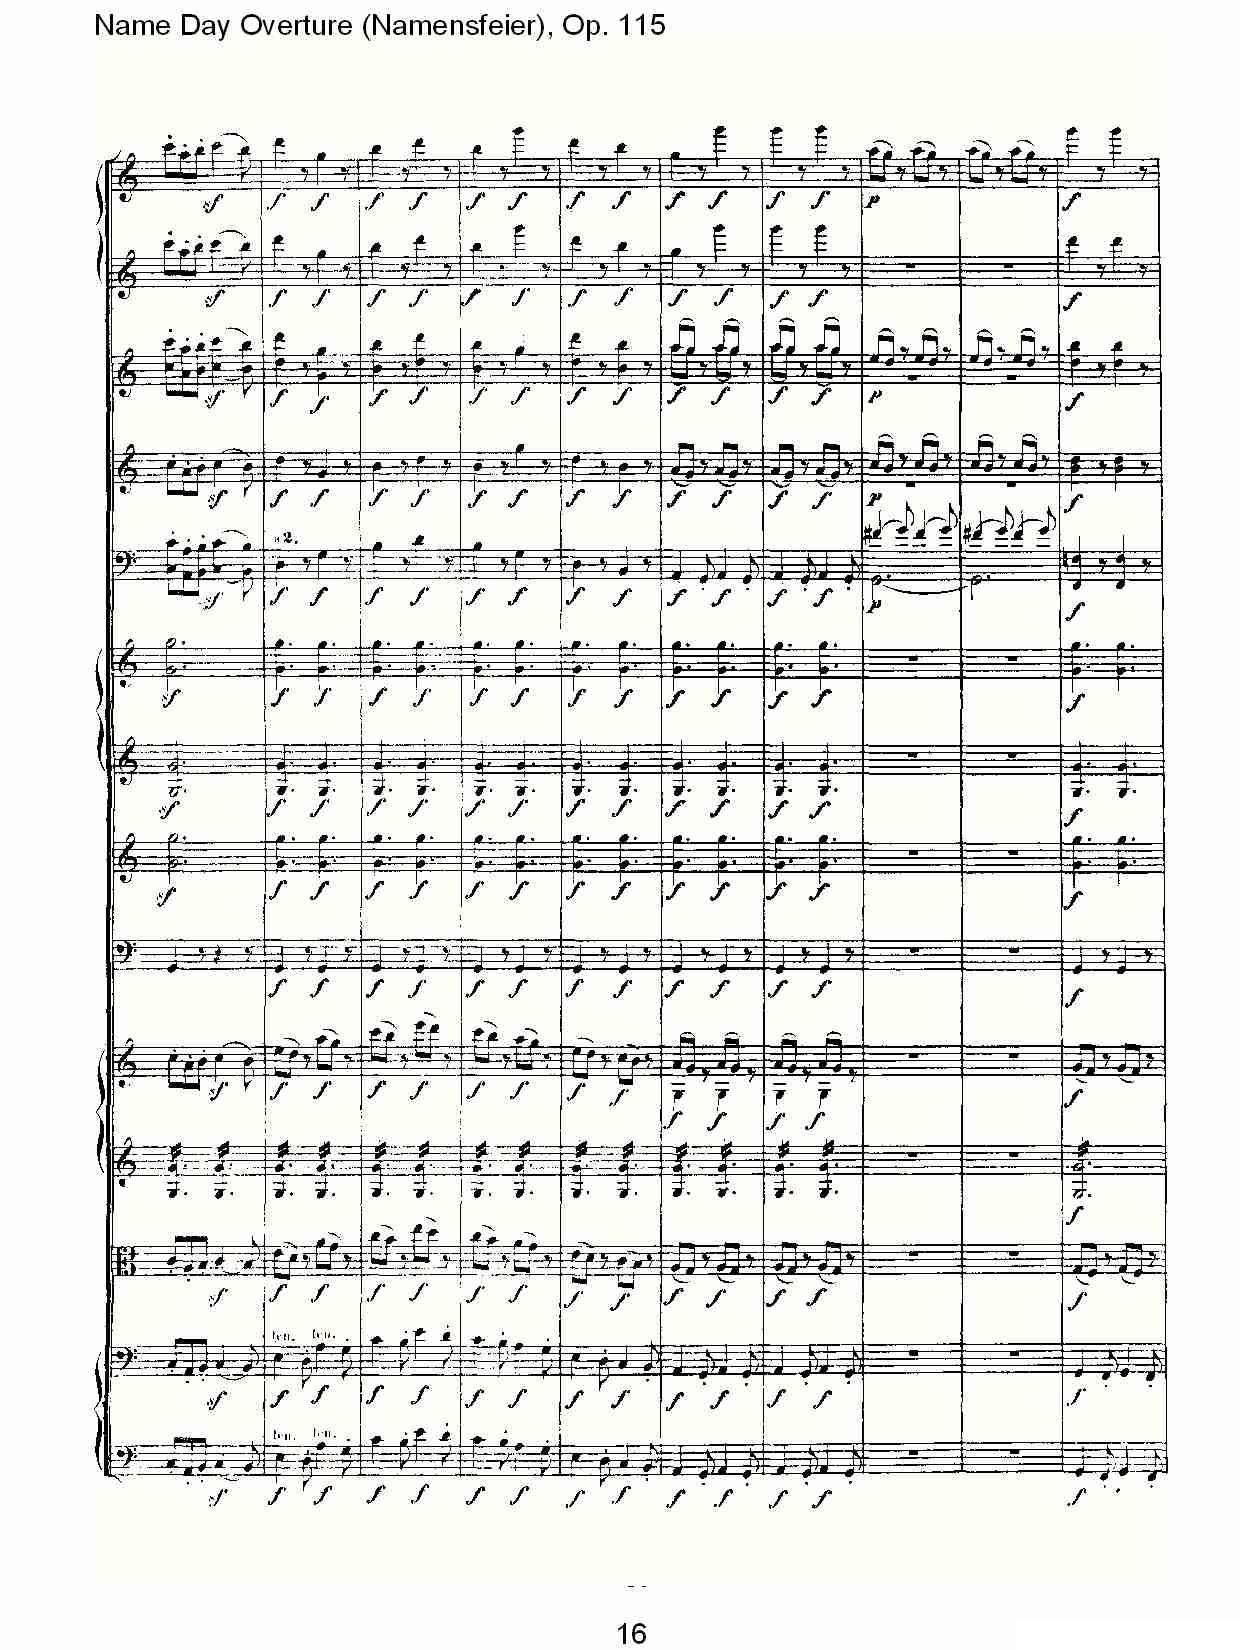 Name Day Overture（Namensfeier)，Op.11）其它曲谱（图16）